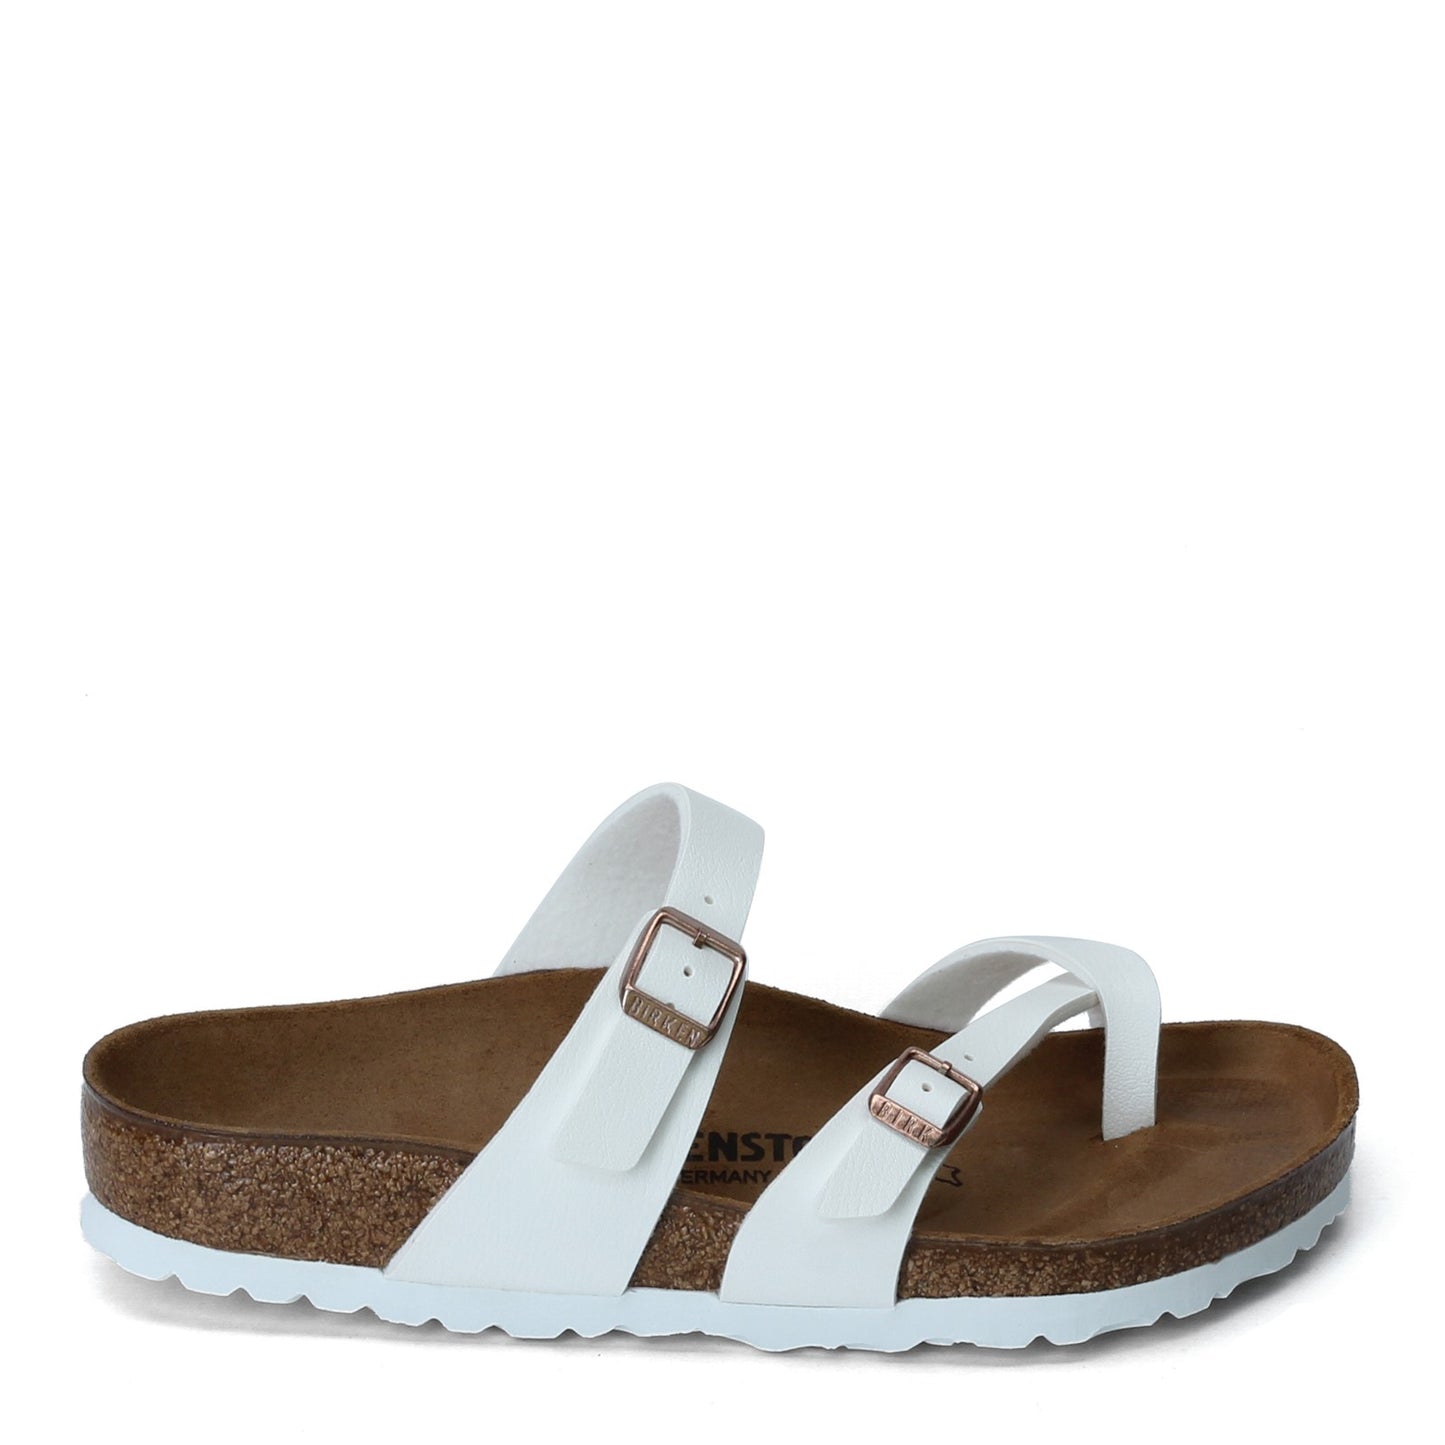 Peltz Shoes  Women's Birkenstock Mayari Sandal WHITE 1014 190 R